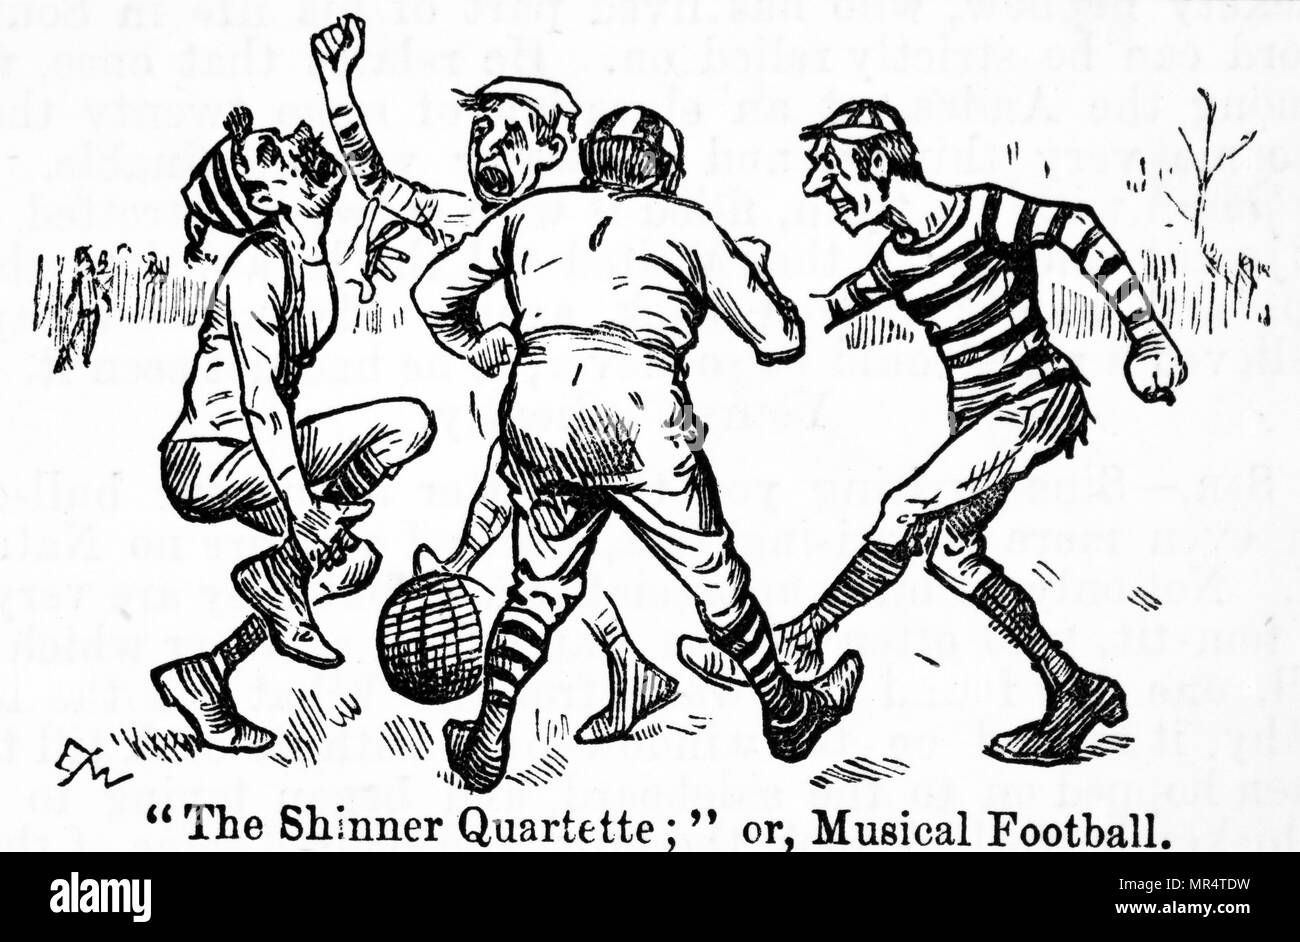 Cartoon depicting a football match between amateurs. Dated 19th century Stock Photo